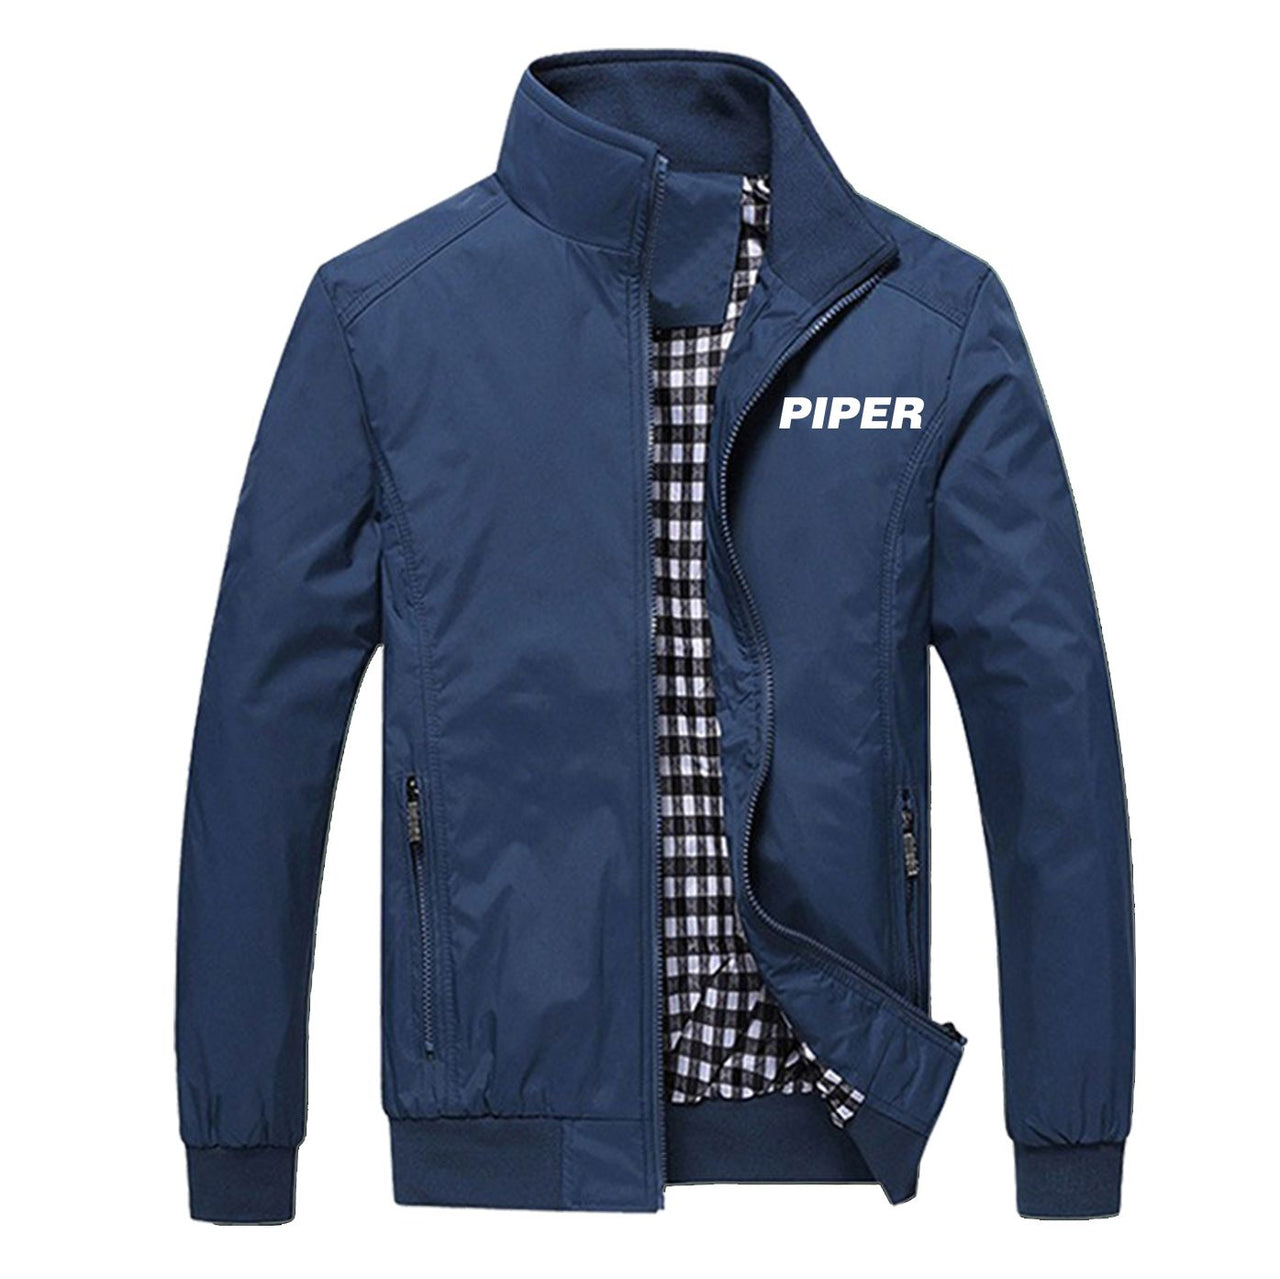 Piper & Text Designed Stylish Jackets